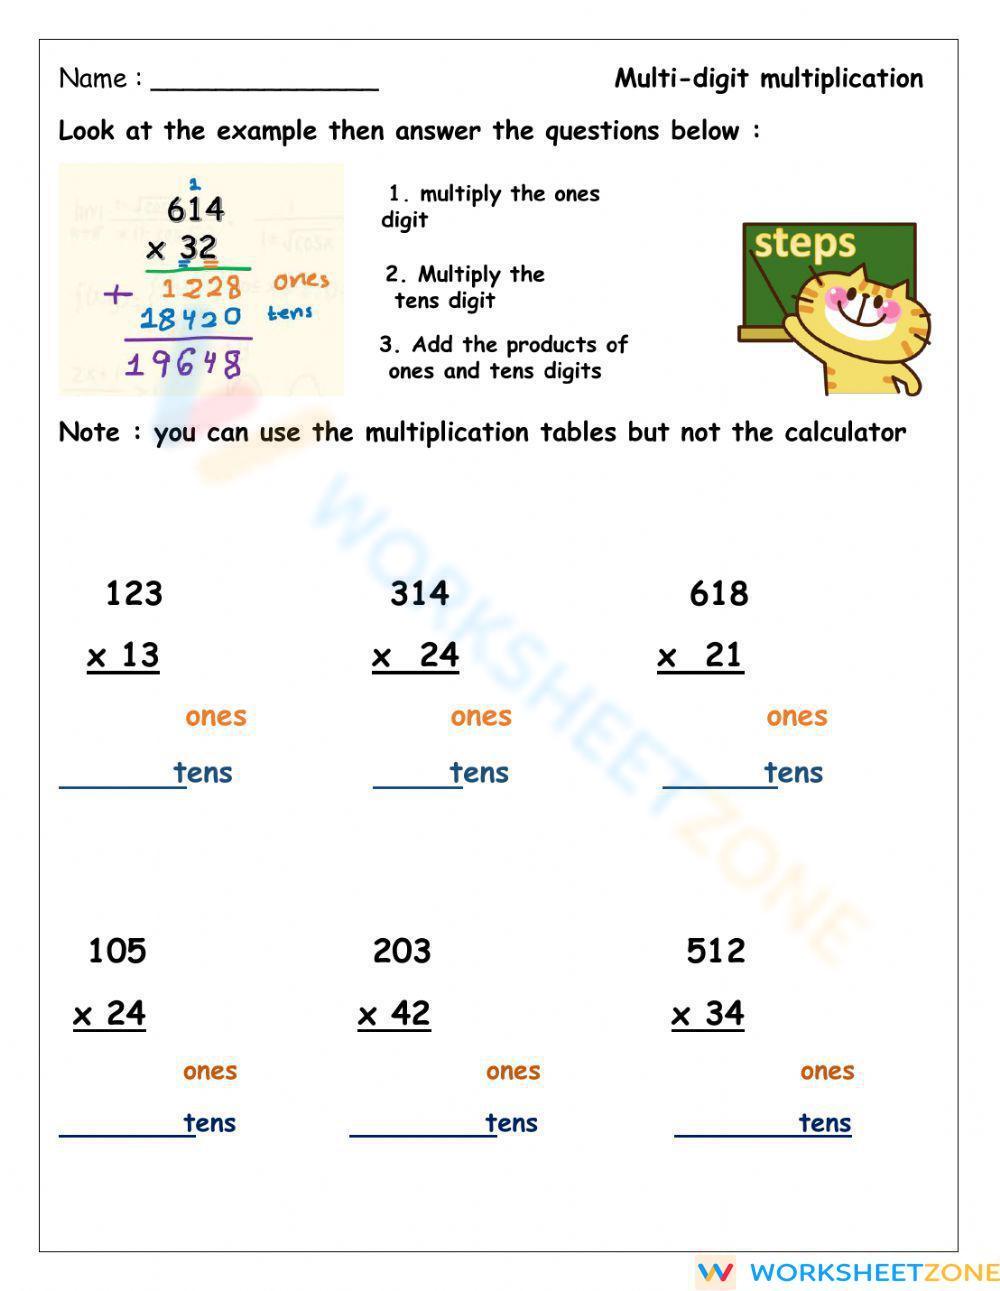 multi-digit-multiplication-worksheet-zone